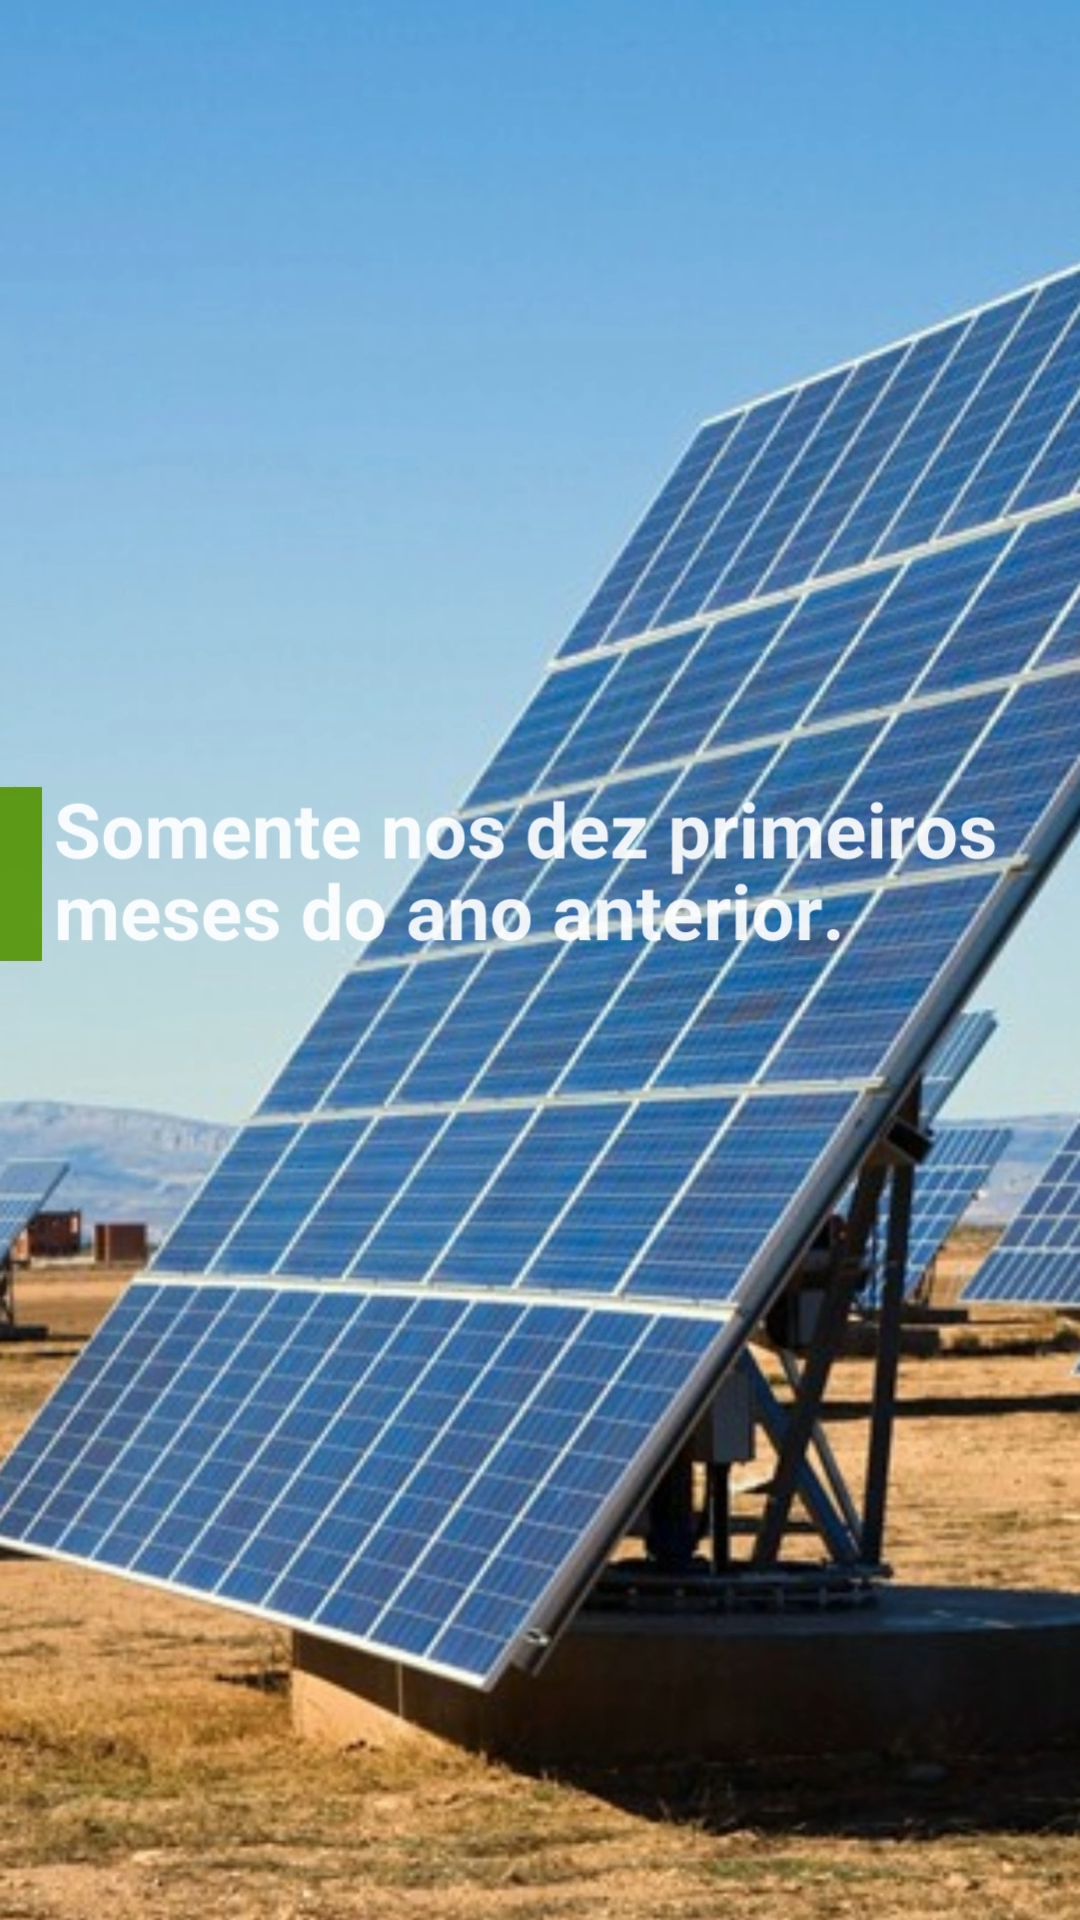 Energy Brasil - Interlagos no Instagram: “▪️ A energia solar